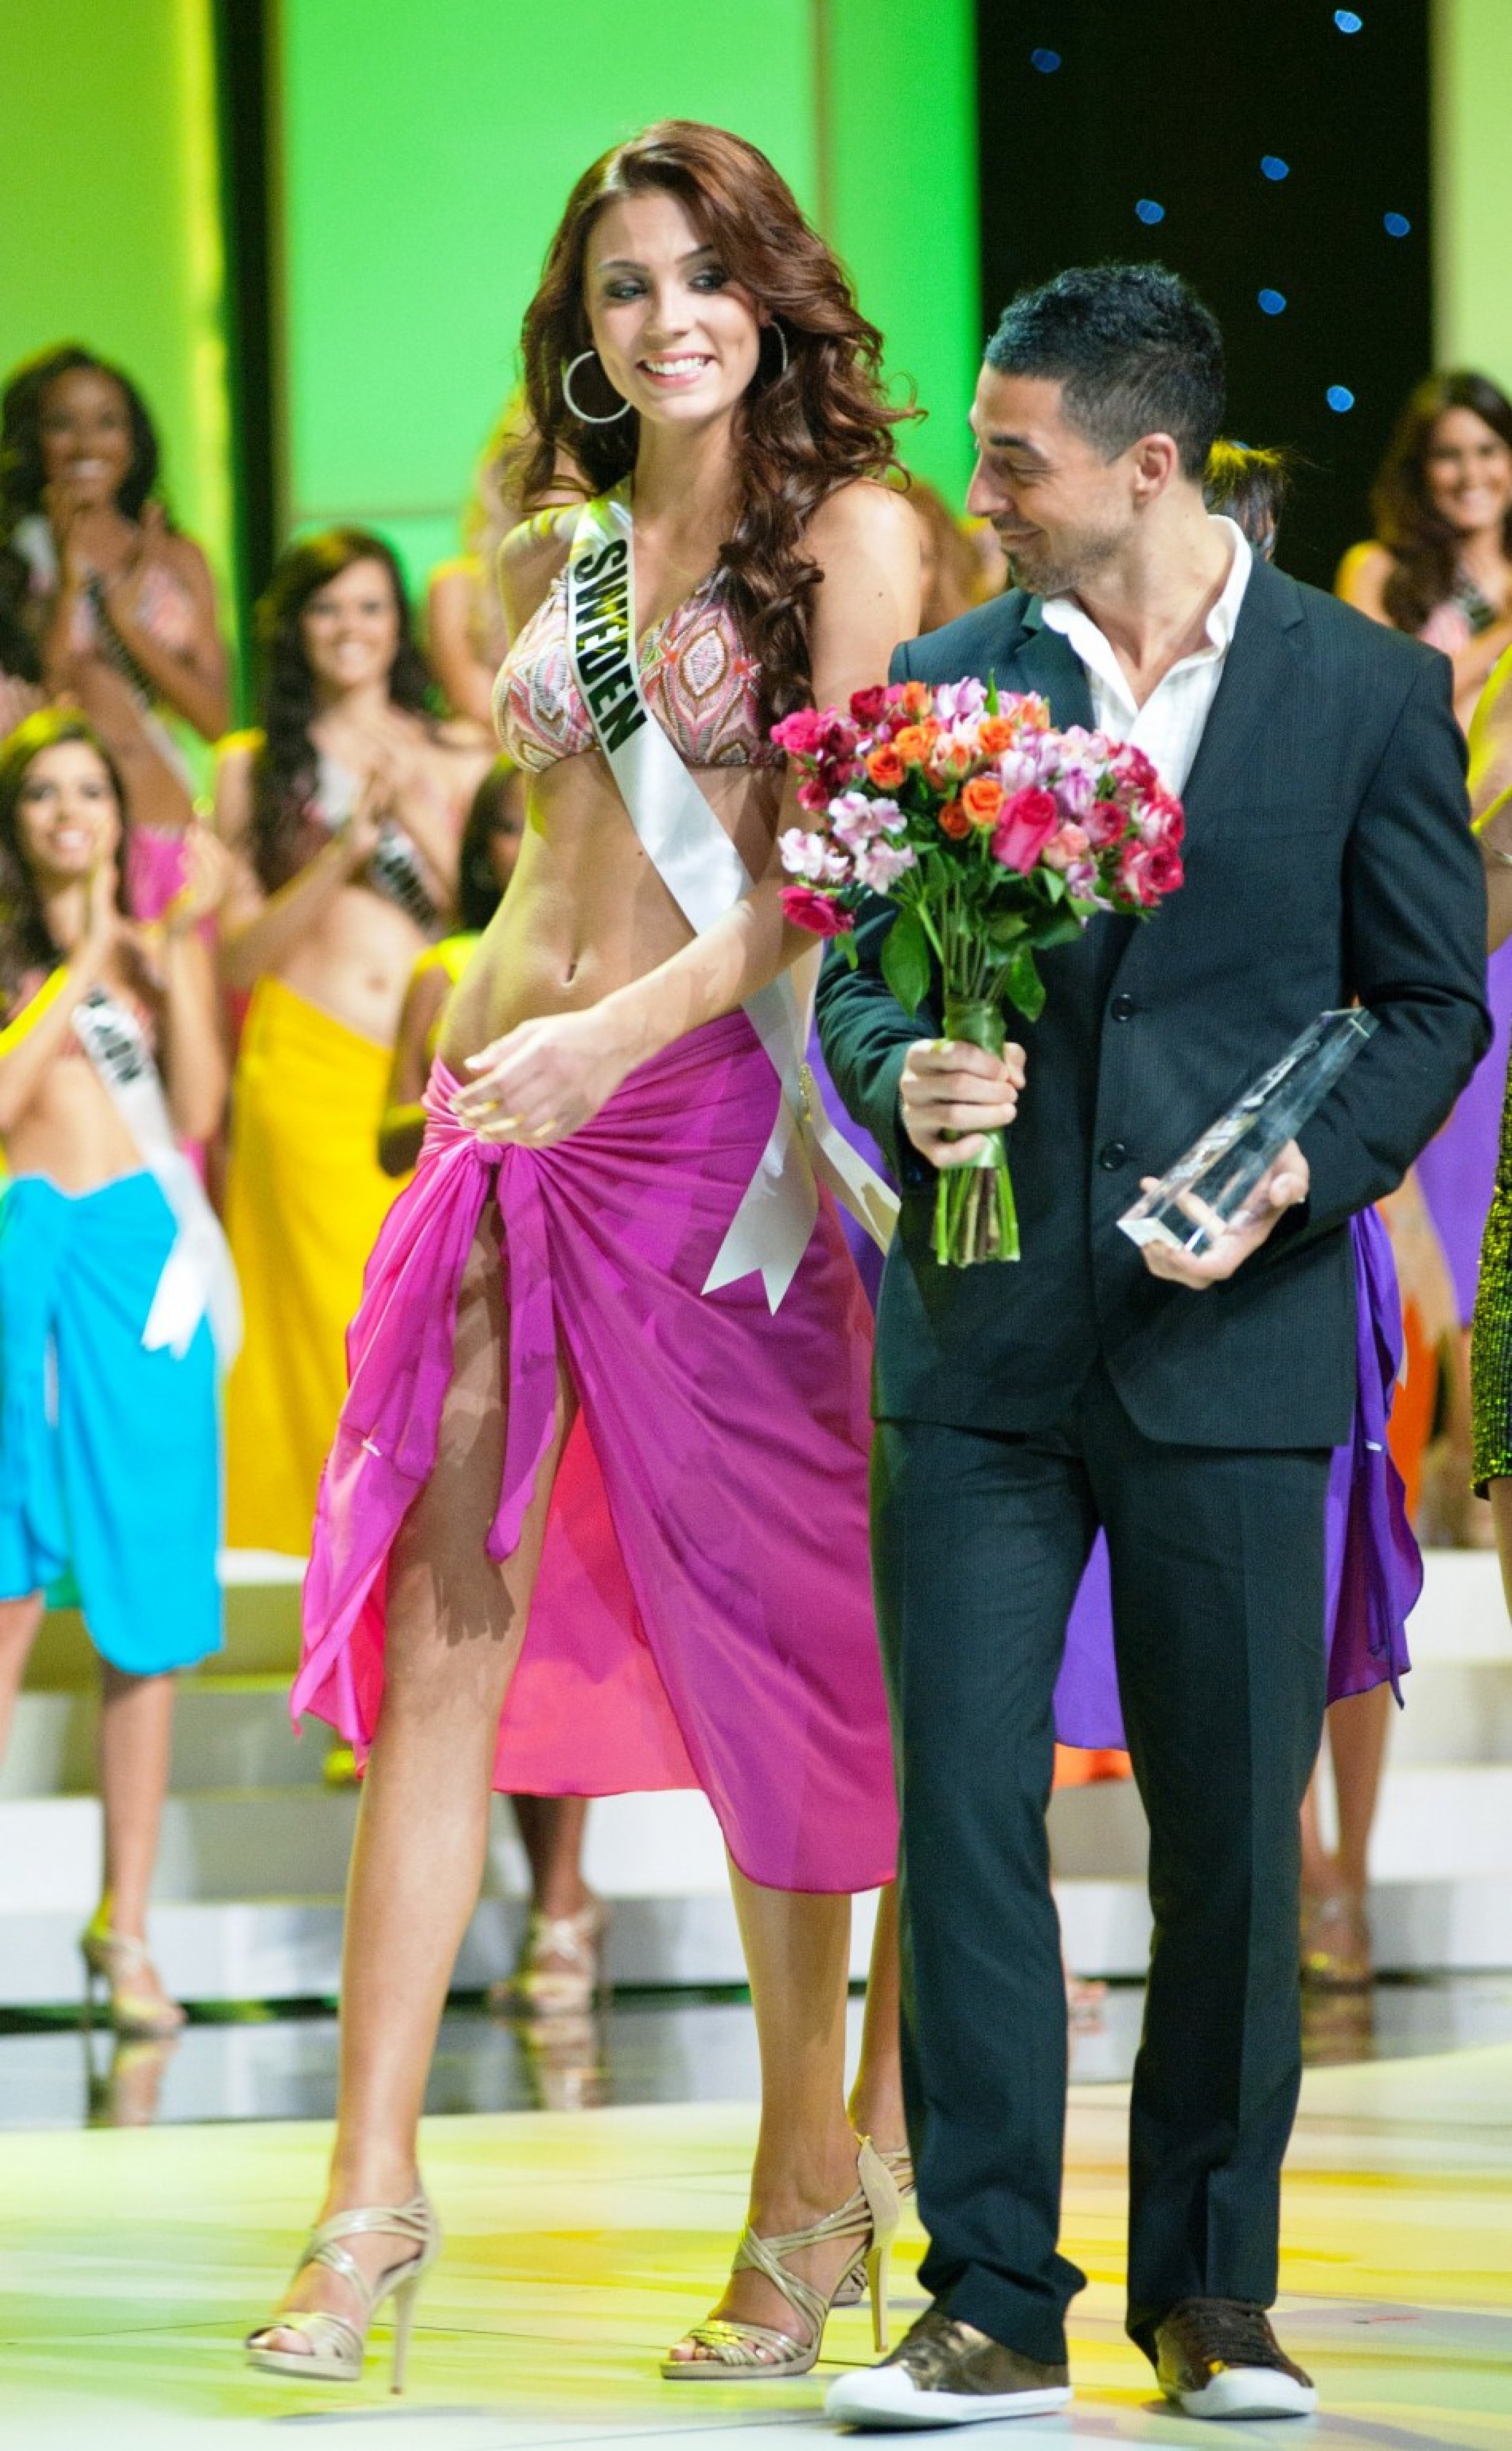  Miss Sweden 2011 won the Miss Photogenic award